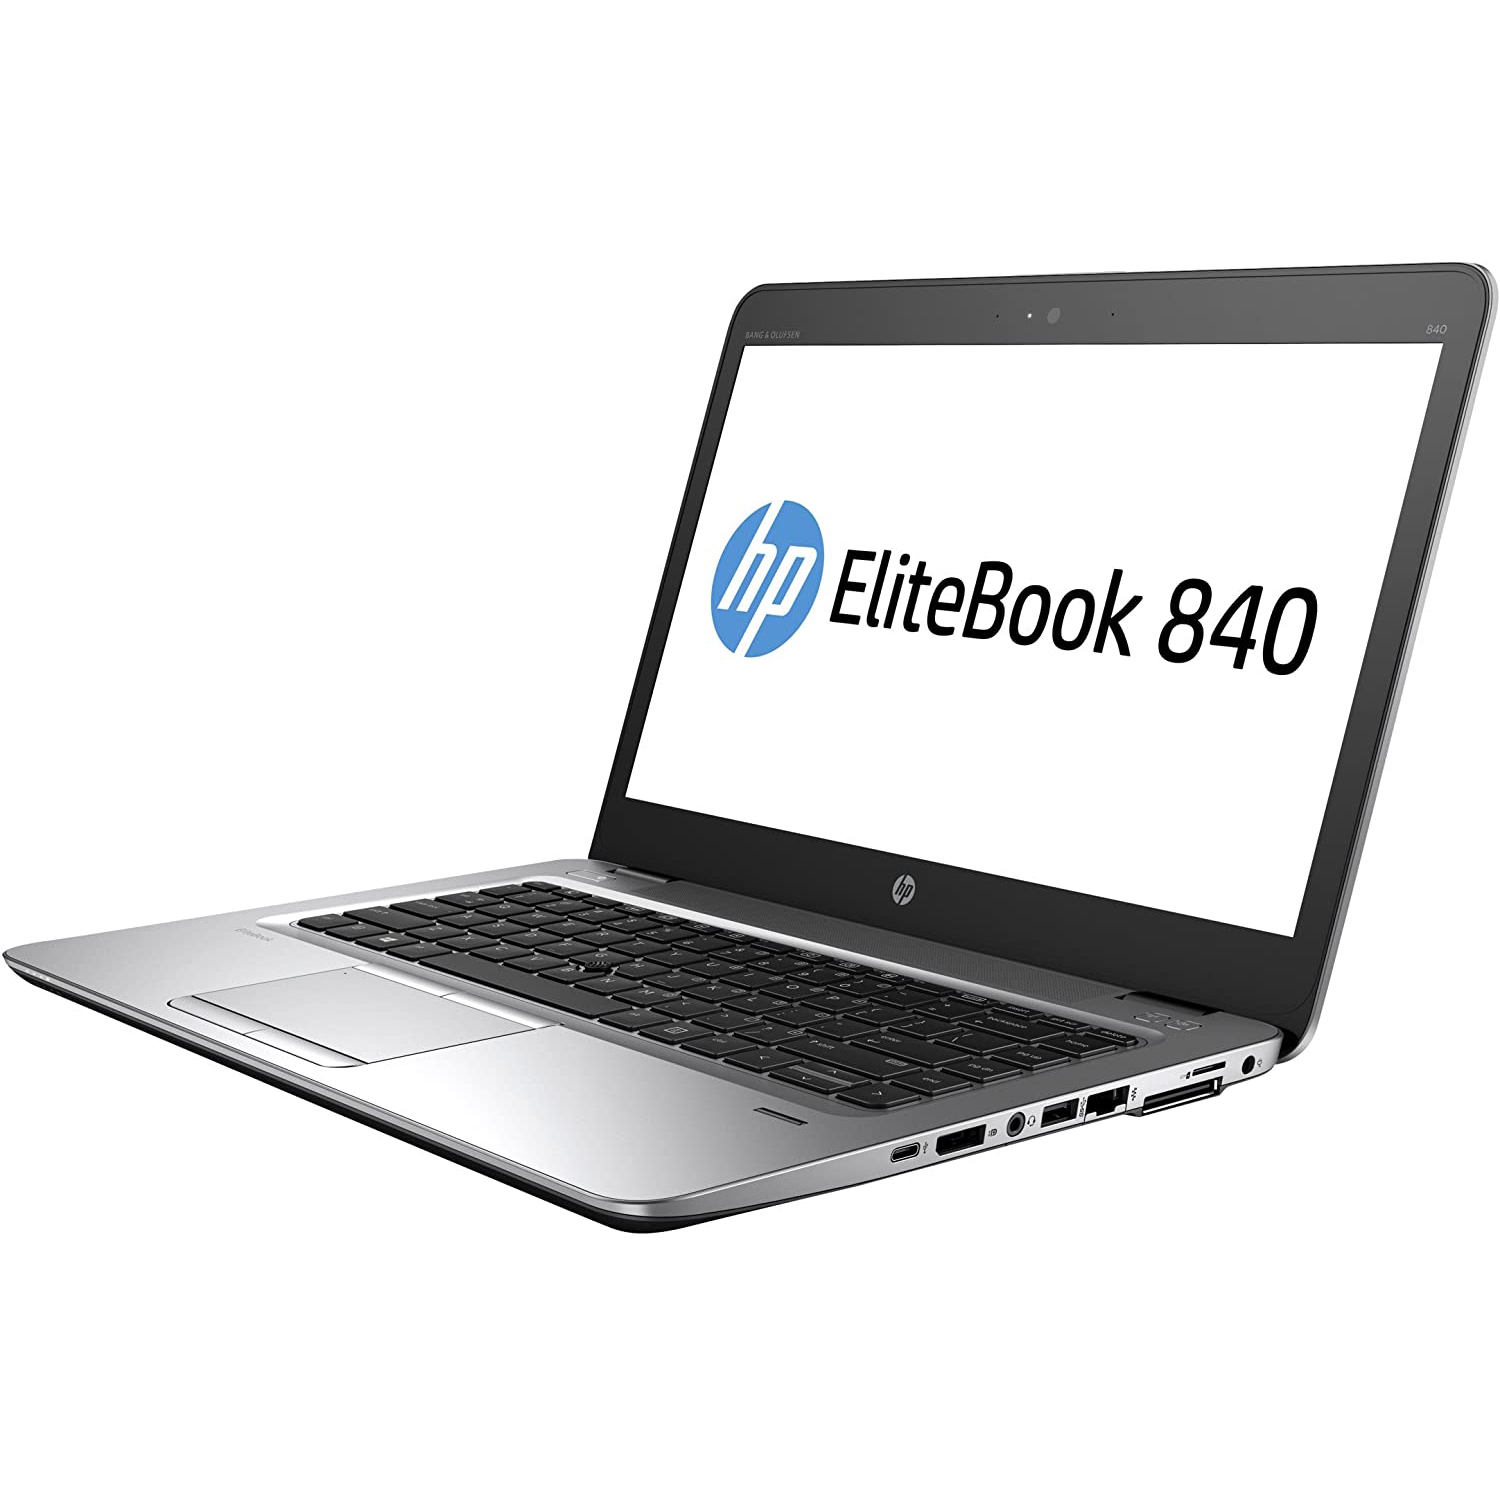 Refurbished (Good) - HP EliteBook 840 G4 14" Laptop - Intel Core i5-7200U / 8GB RAM / 256GB SSD / Windows 10 Pro *Refurbished*